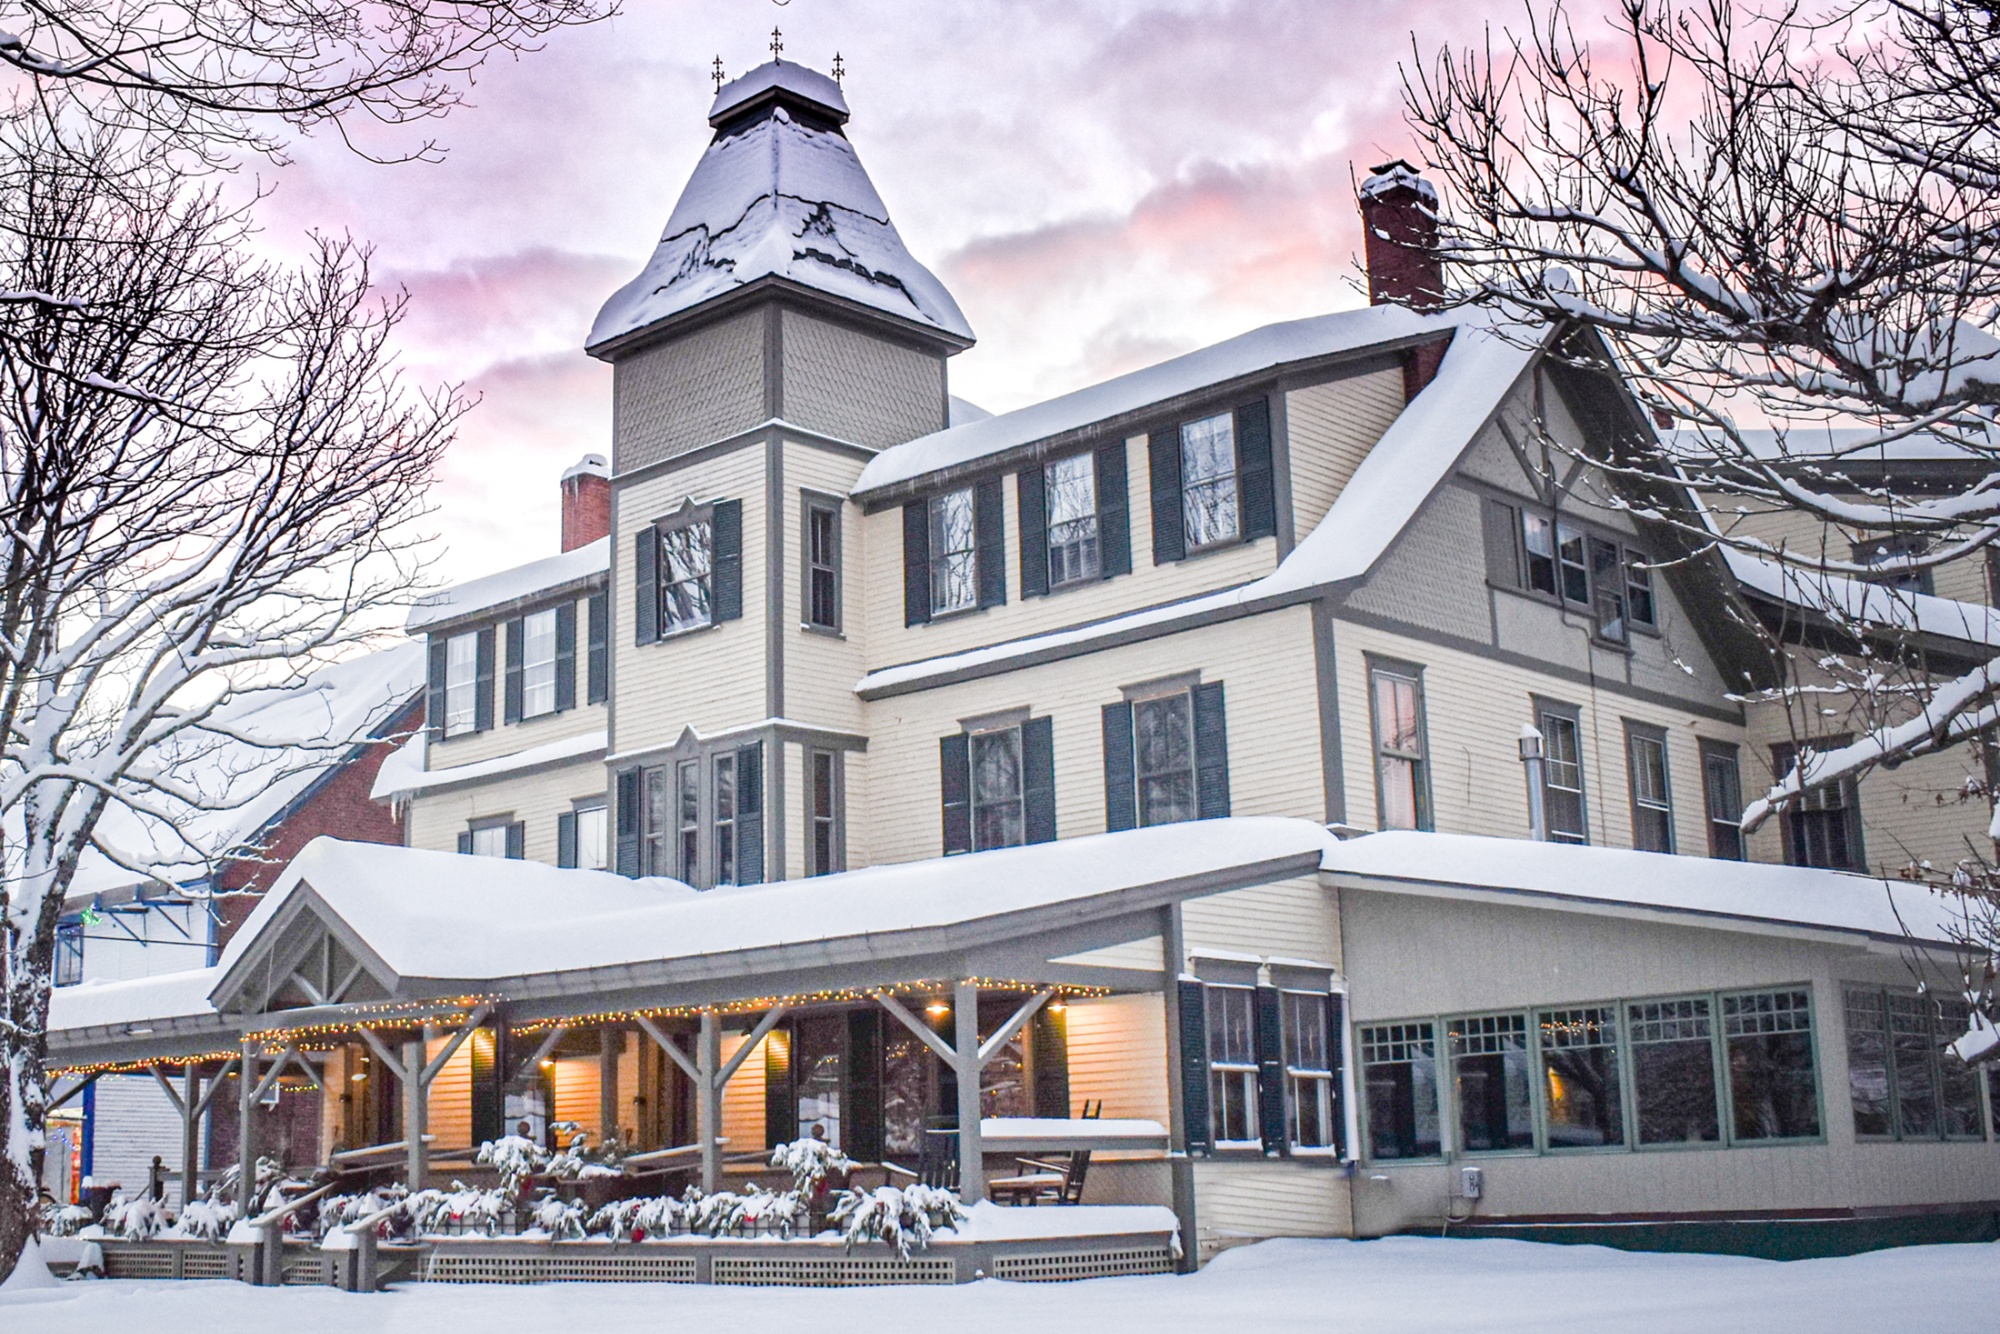 The Norwich Inn in Vermont.